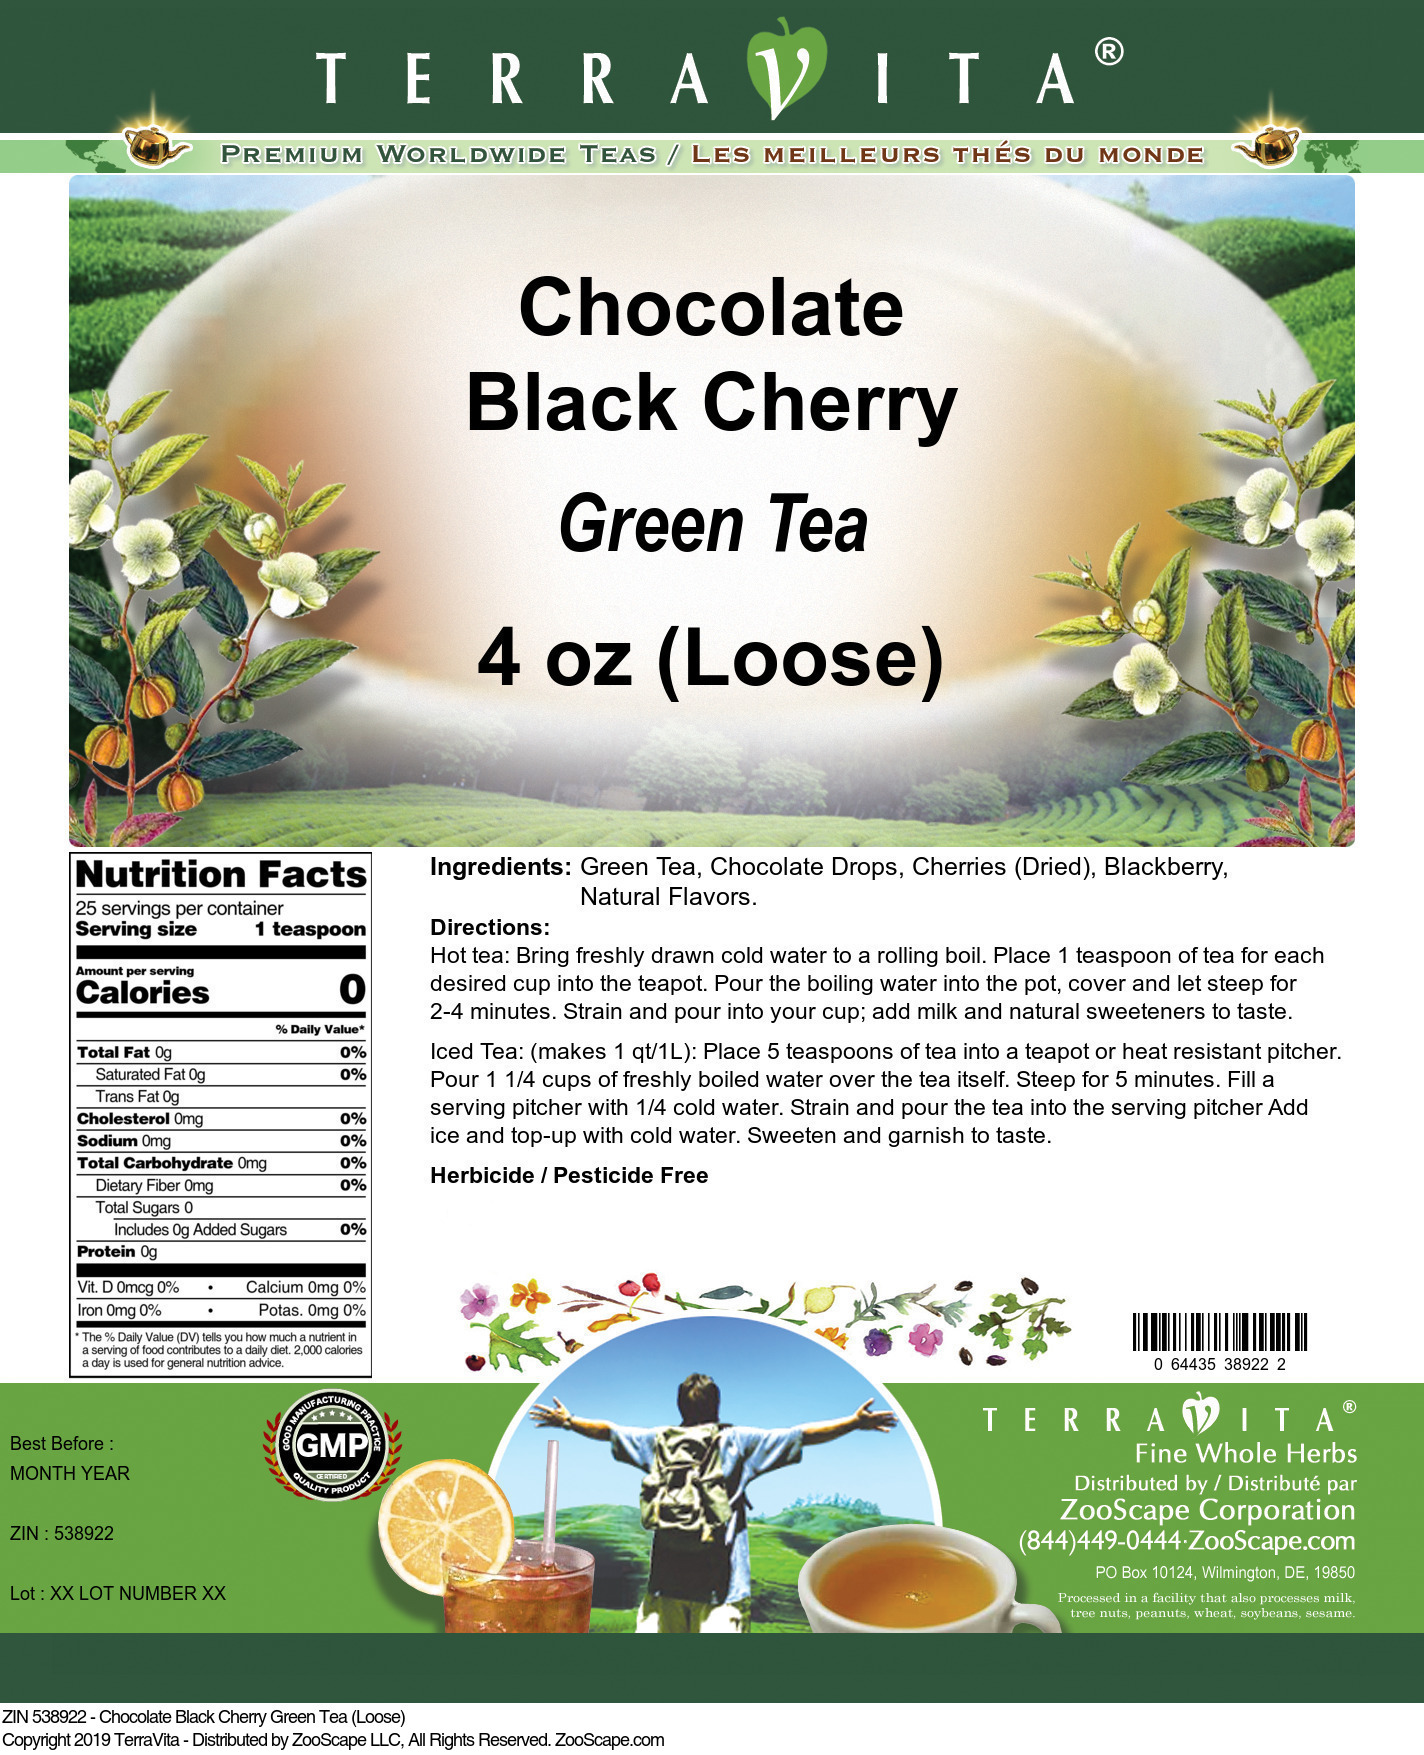 Chocolate Black Cherry Green Tea (Loose) - Label